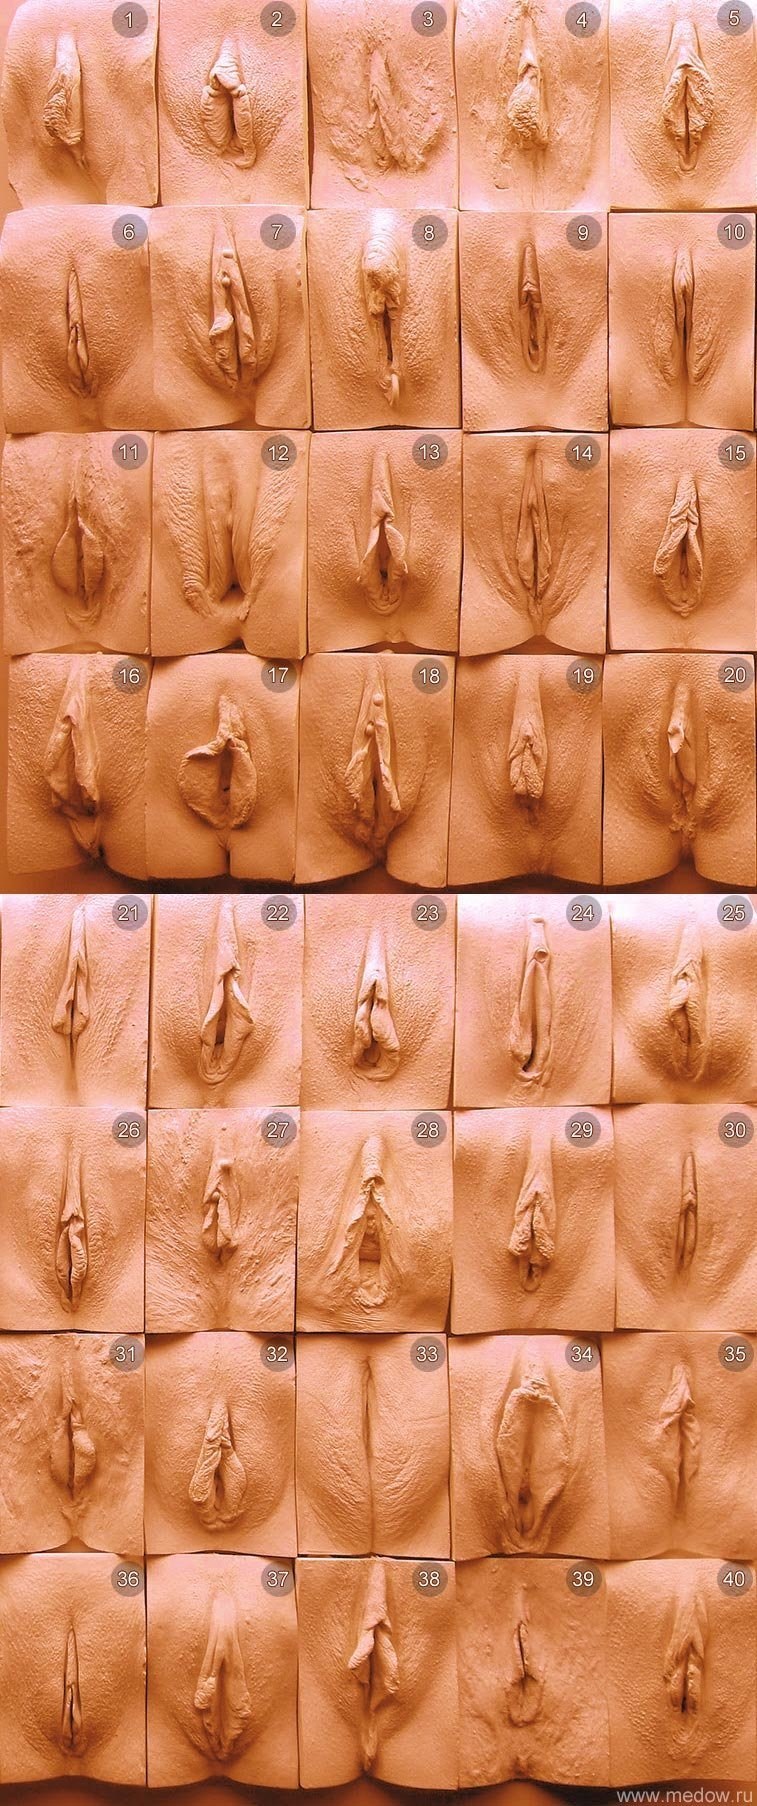 голая вагина все виды фото фото 14